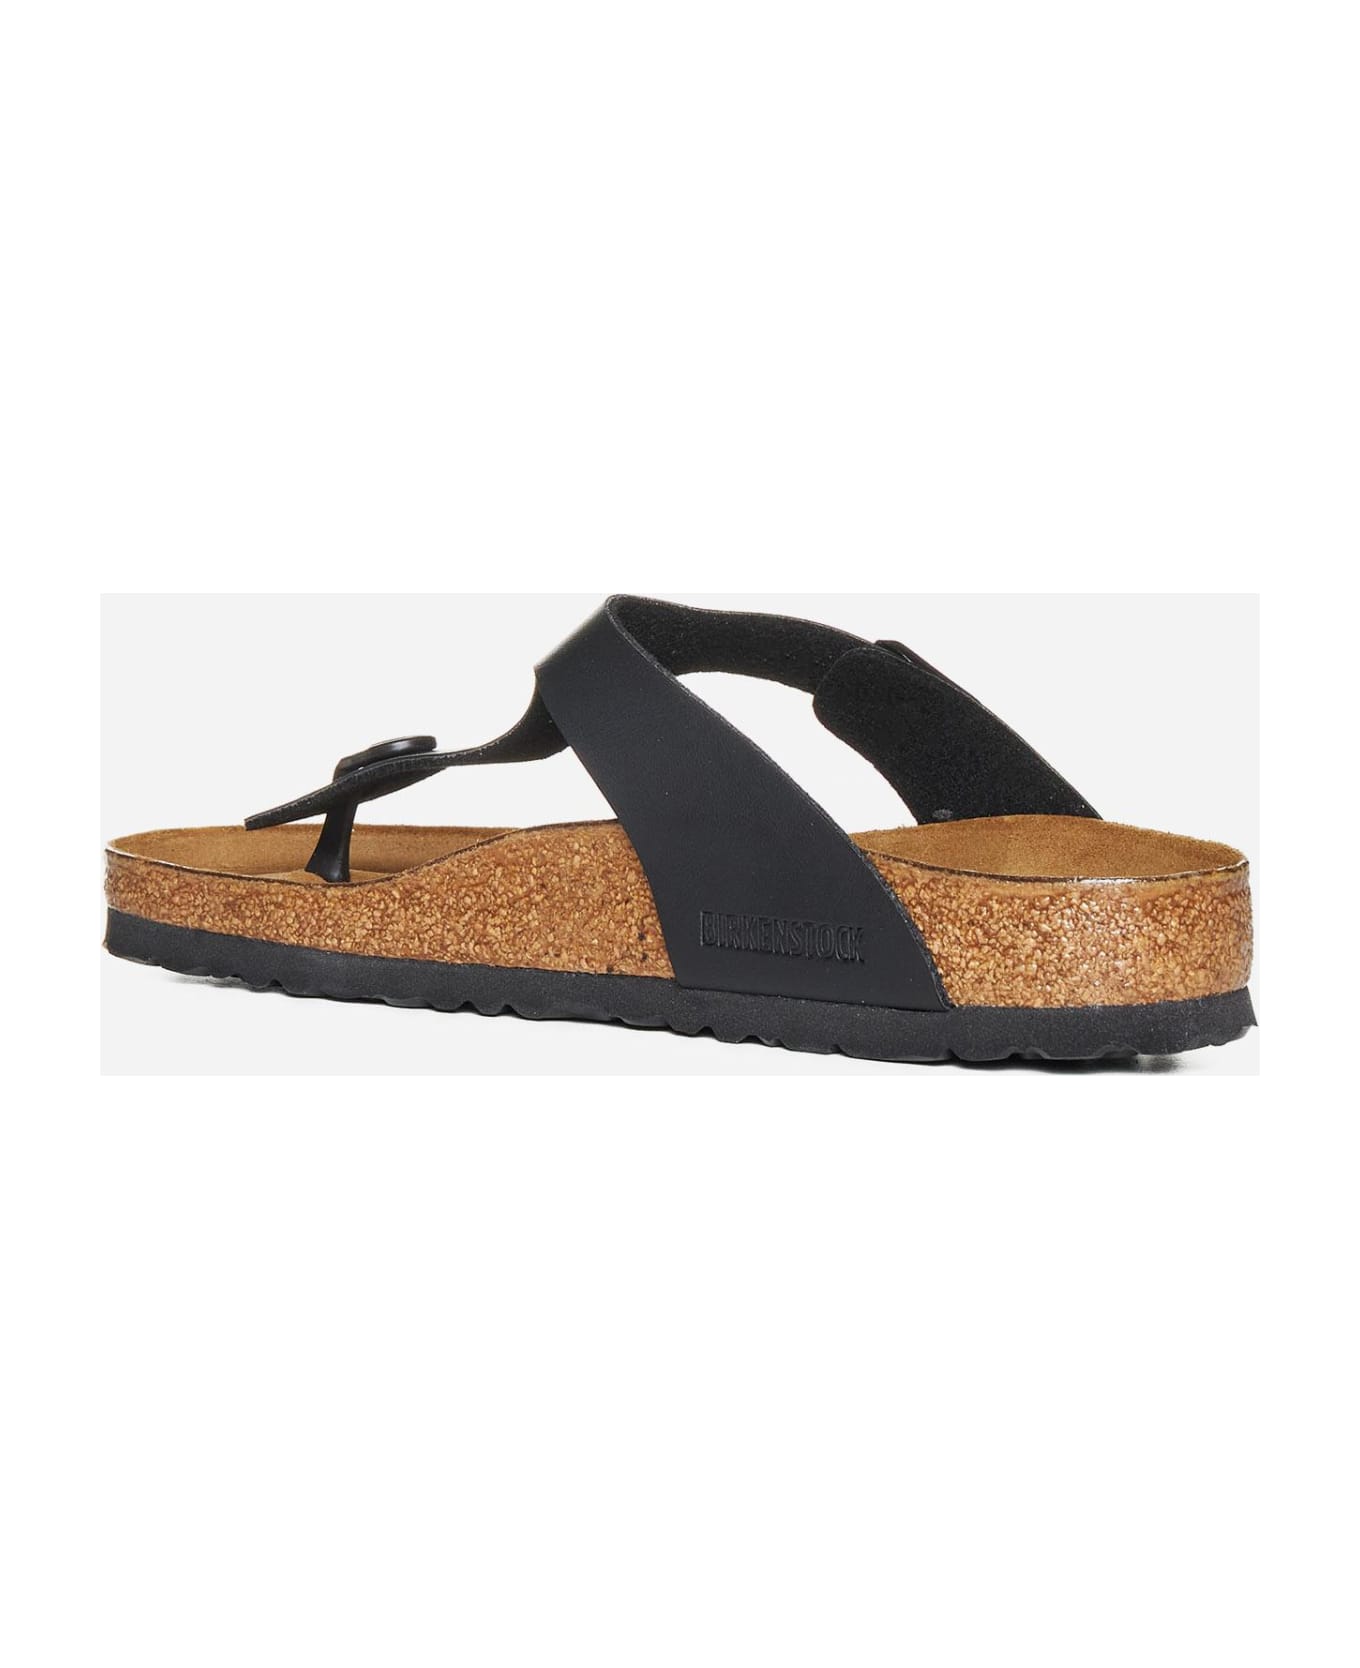 Birkenstock Gizeh Leather Sandals - Black サンダル